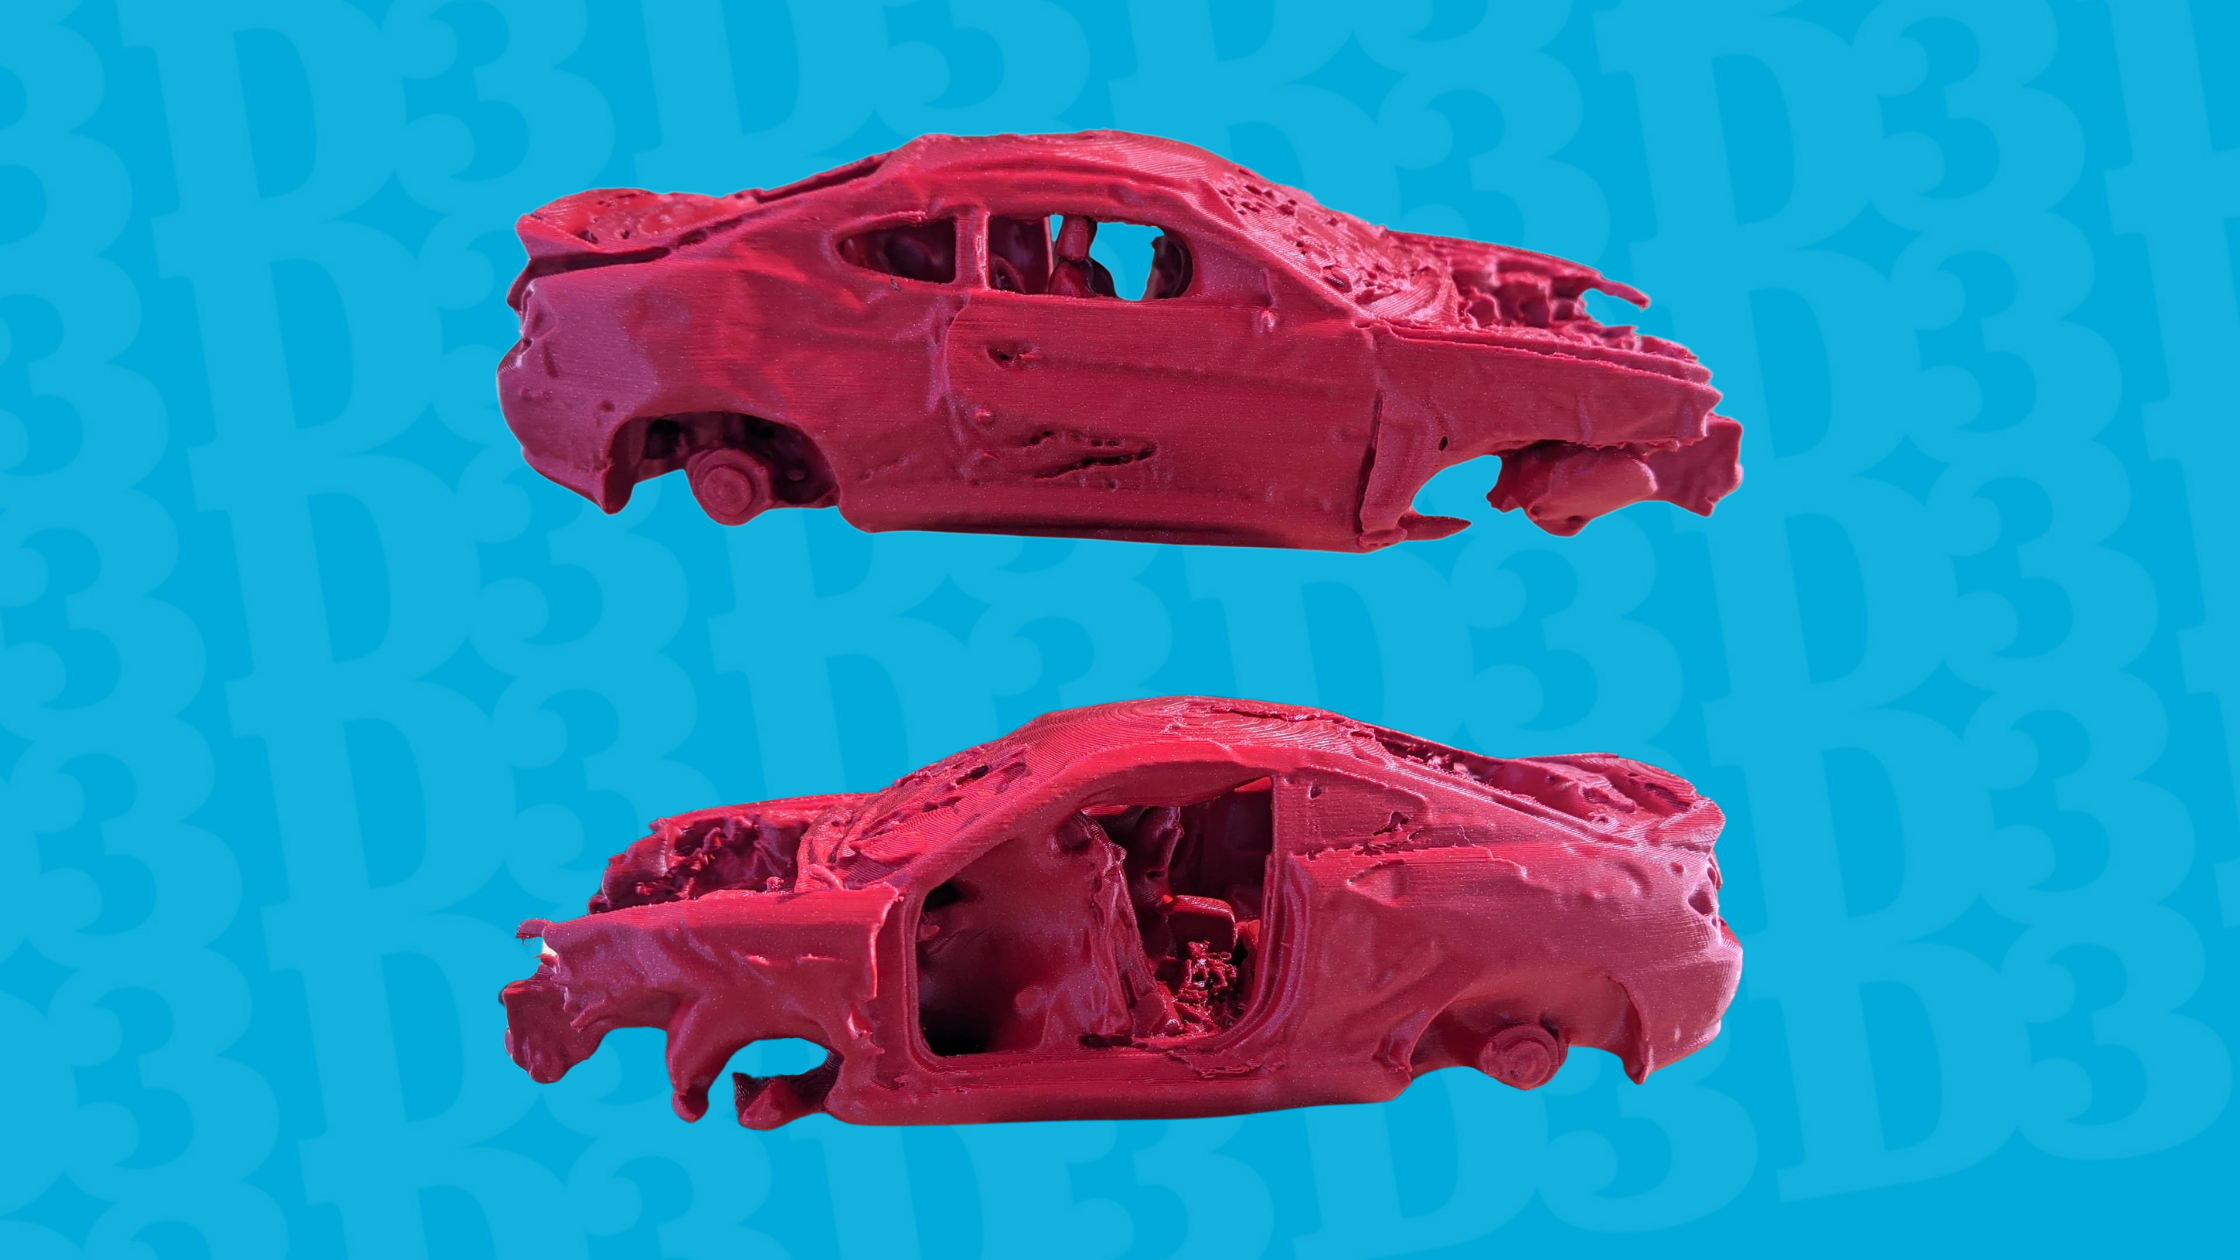 Left side view of a 3D printed crashed Hyundai Tiburon and right side view of a 3D printed crashed Hyundai Tiburon.